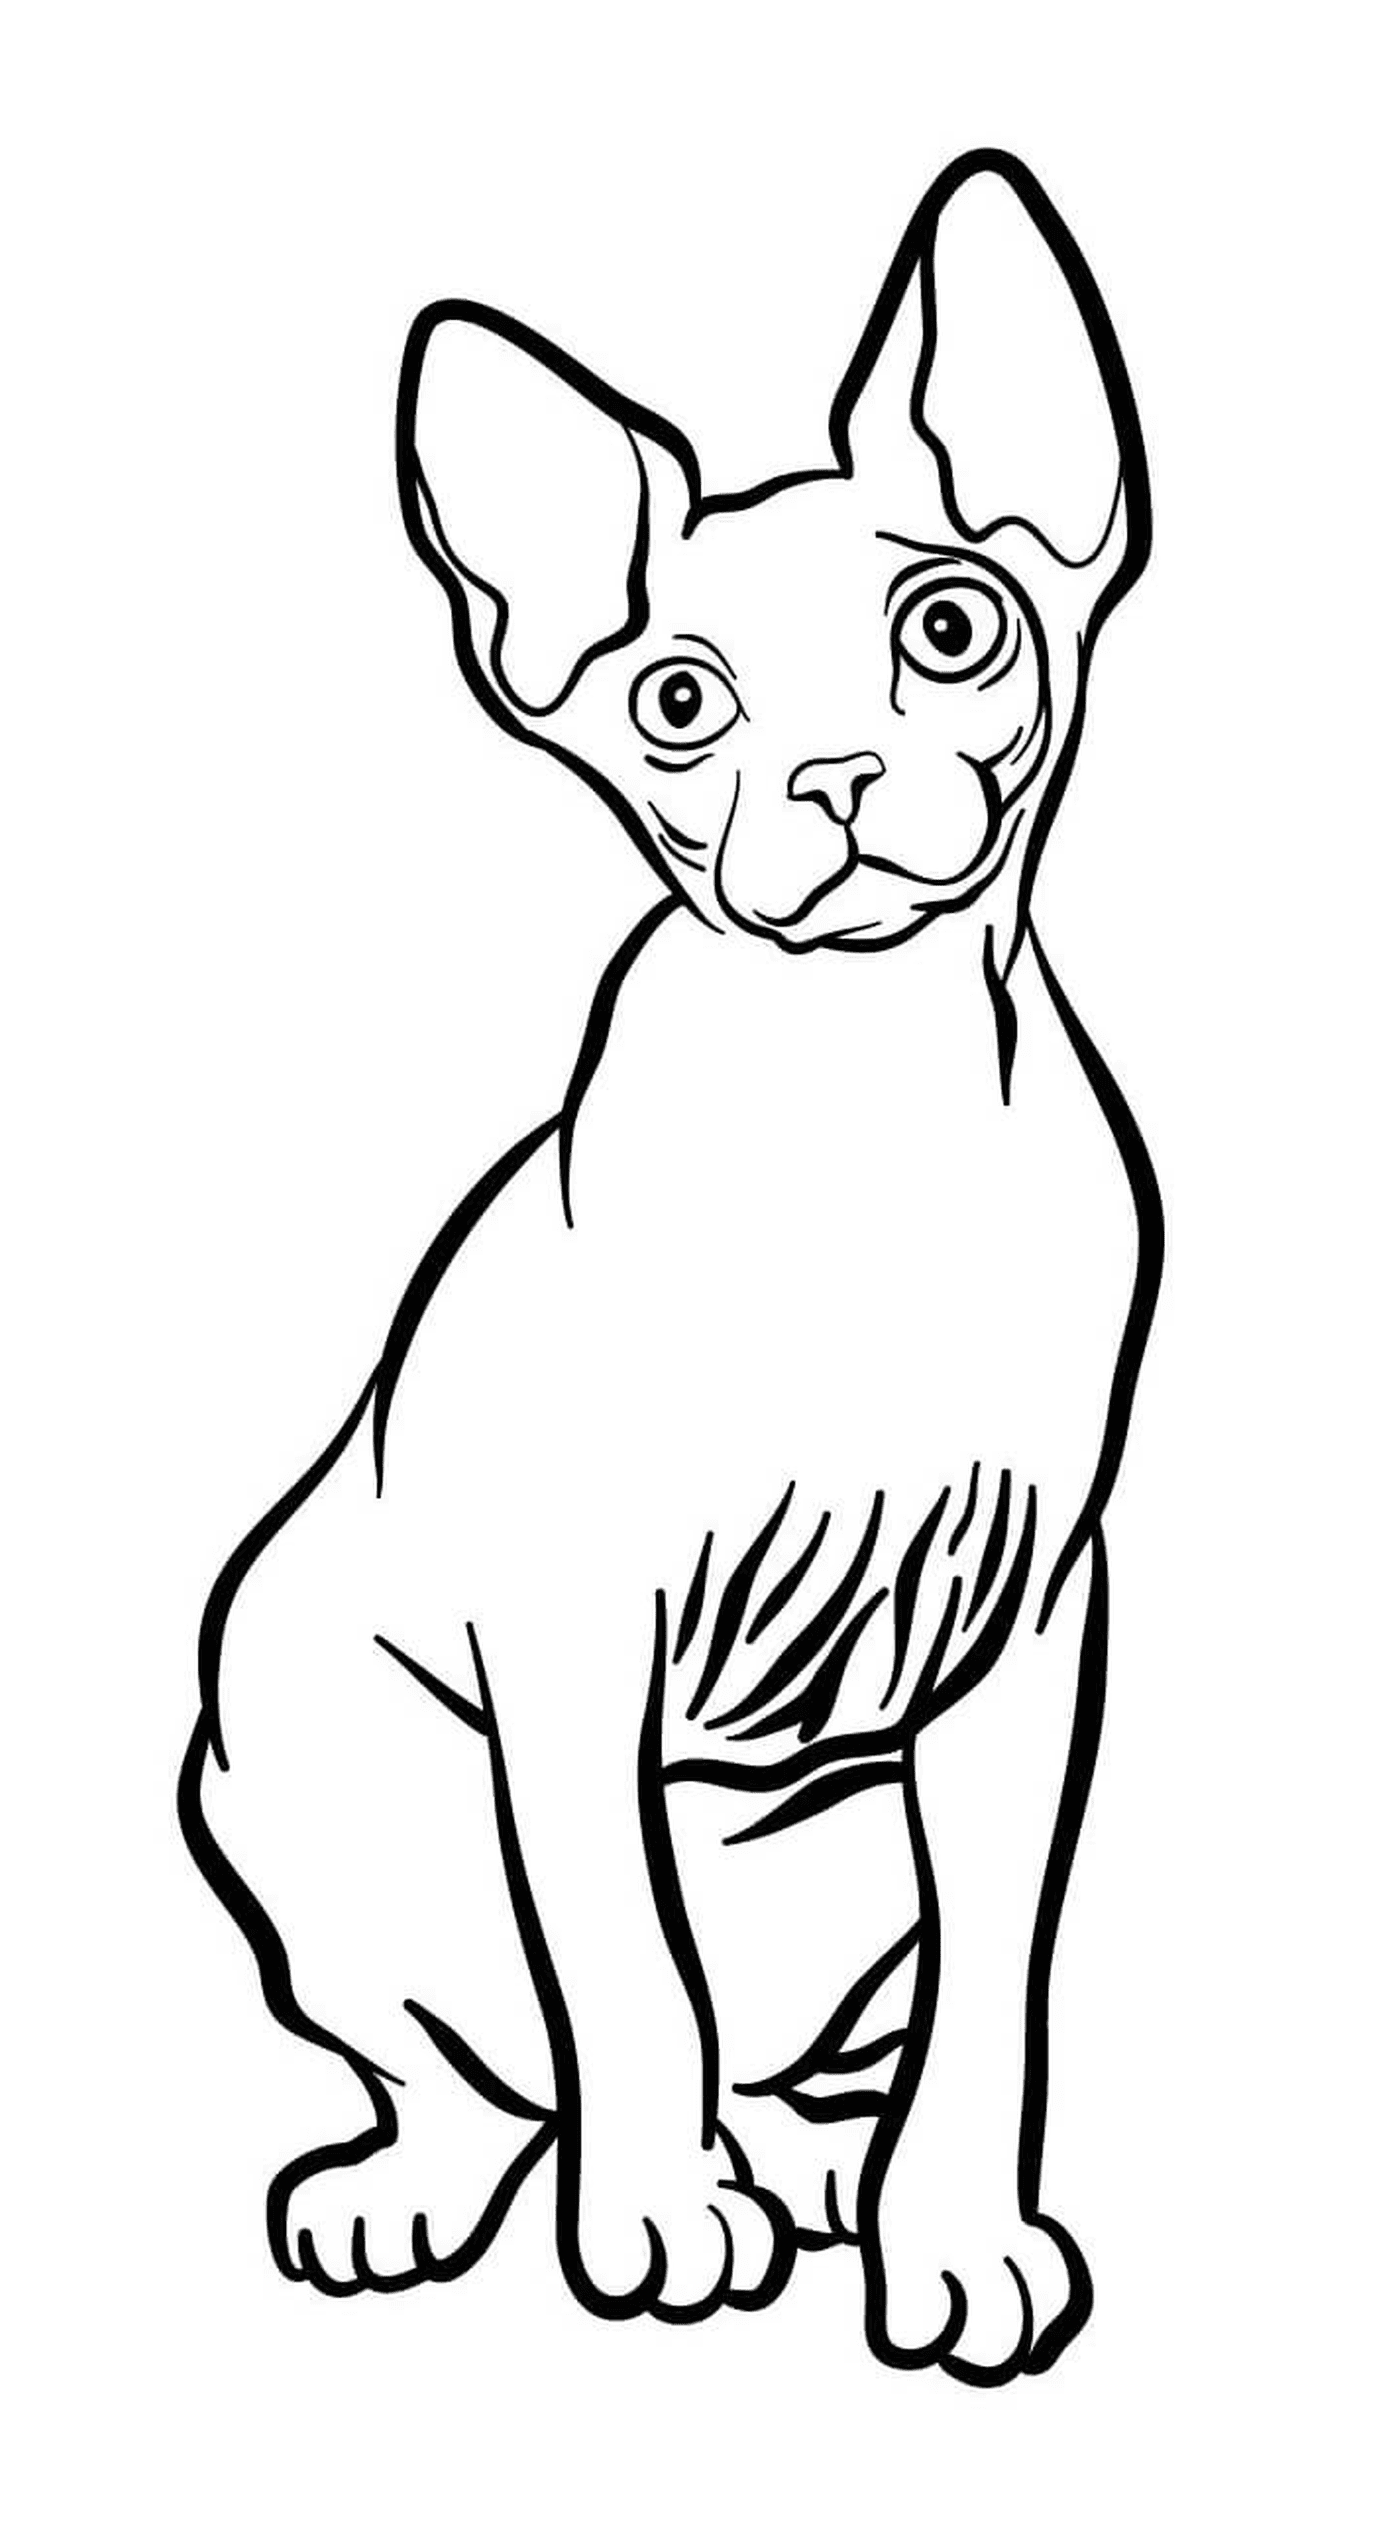 coloriage sphynx est un chat originaire du Canada et ne possede quasiment aucune fourrure